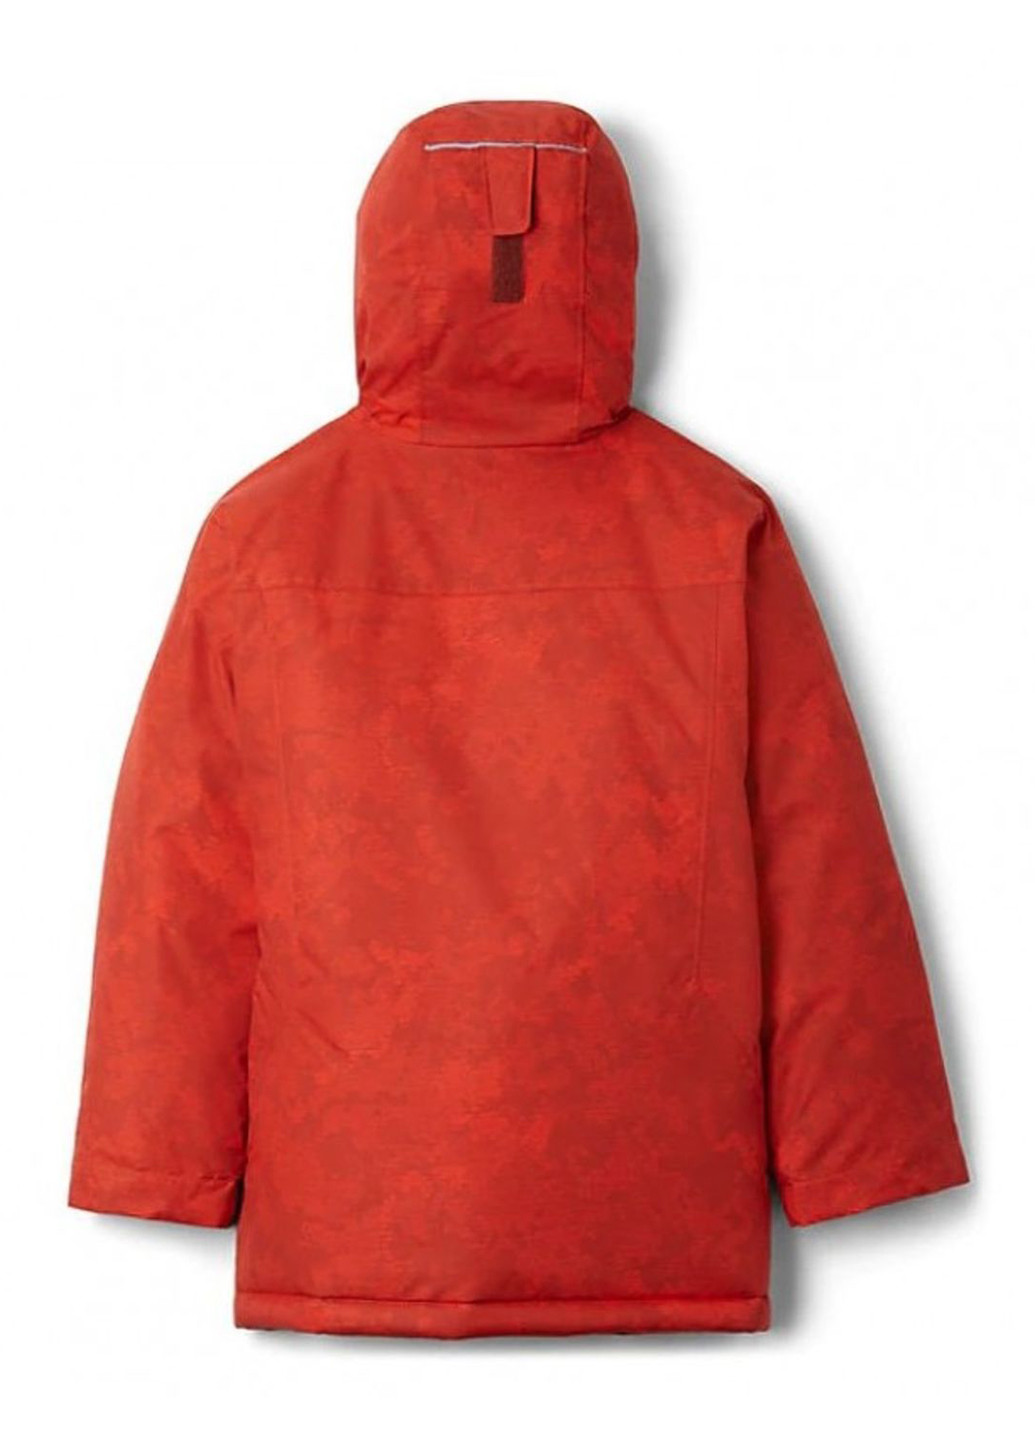 Красная зимняя куртка Columbia